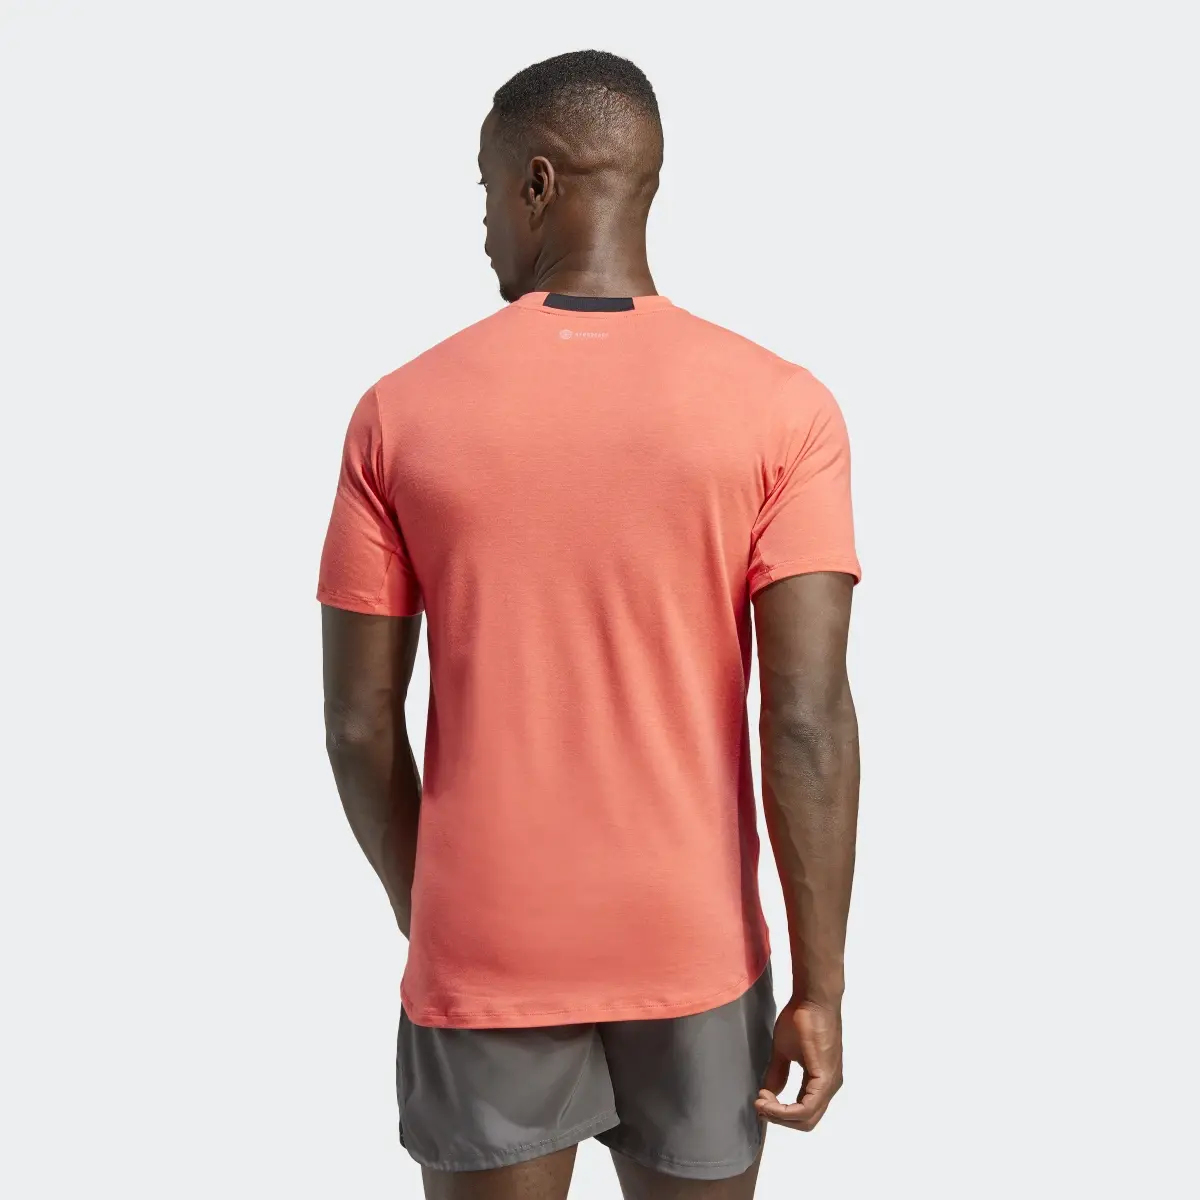 Adidas Designed for Training T-Shirt. 3